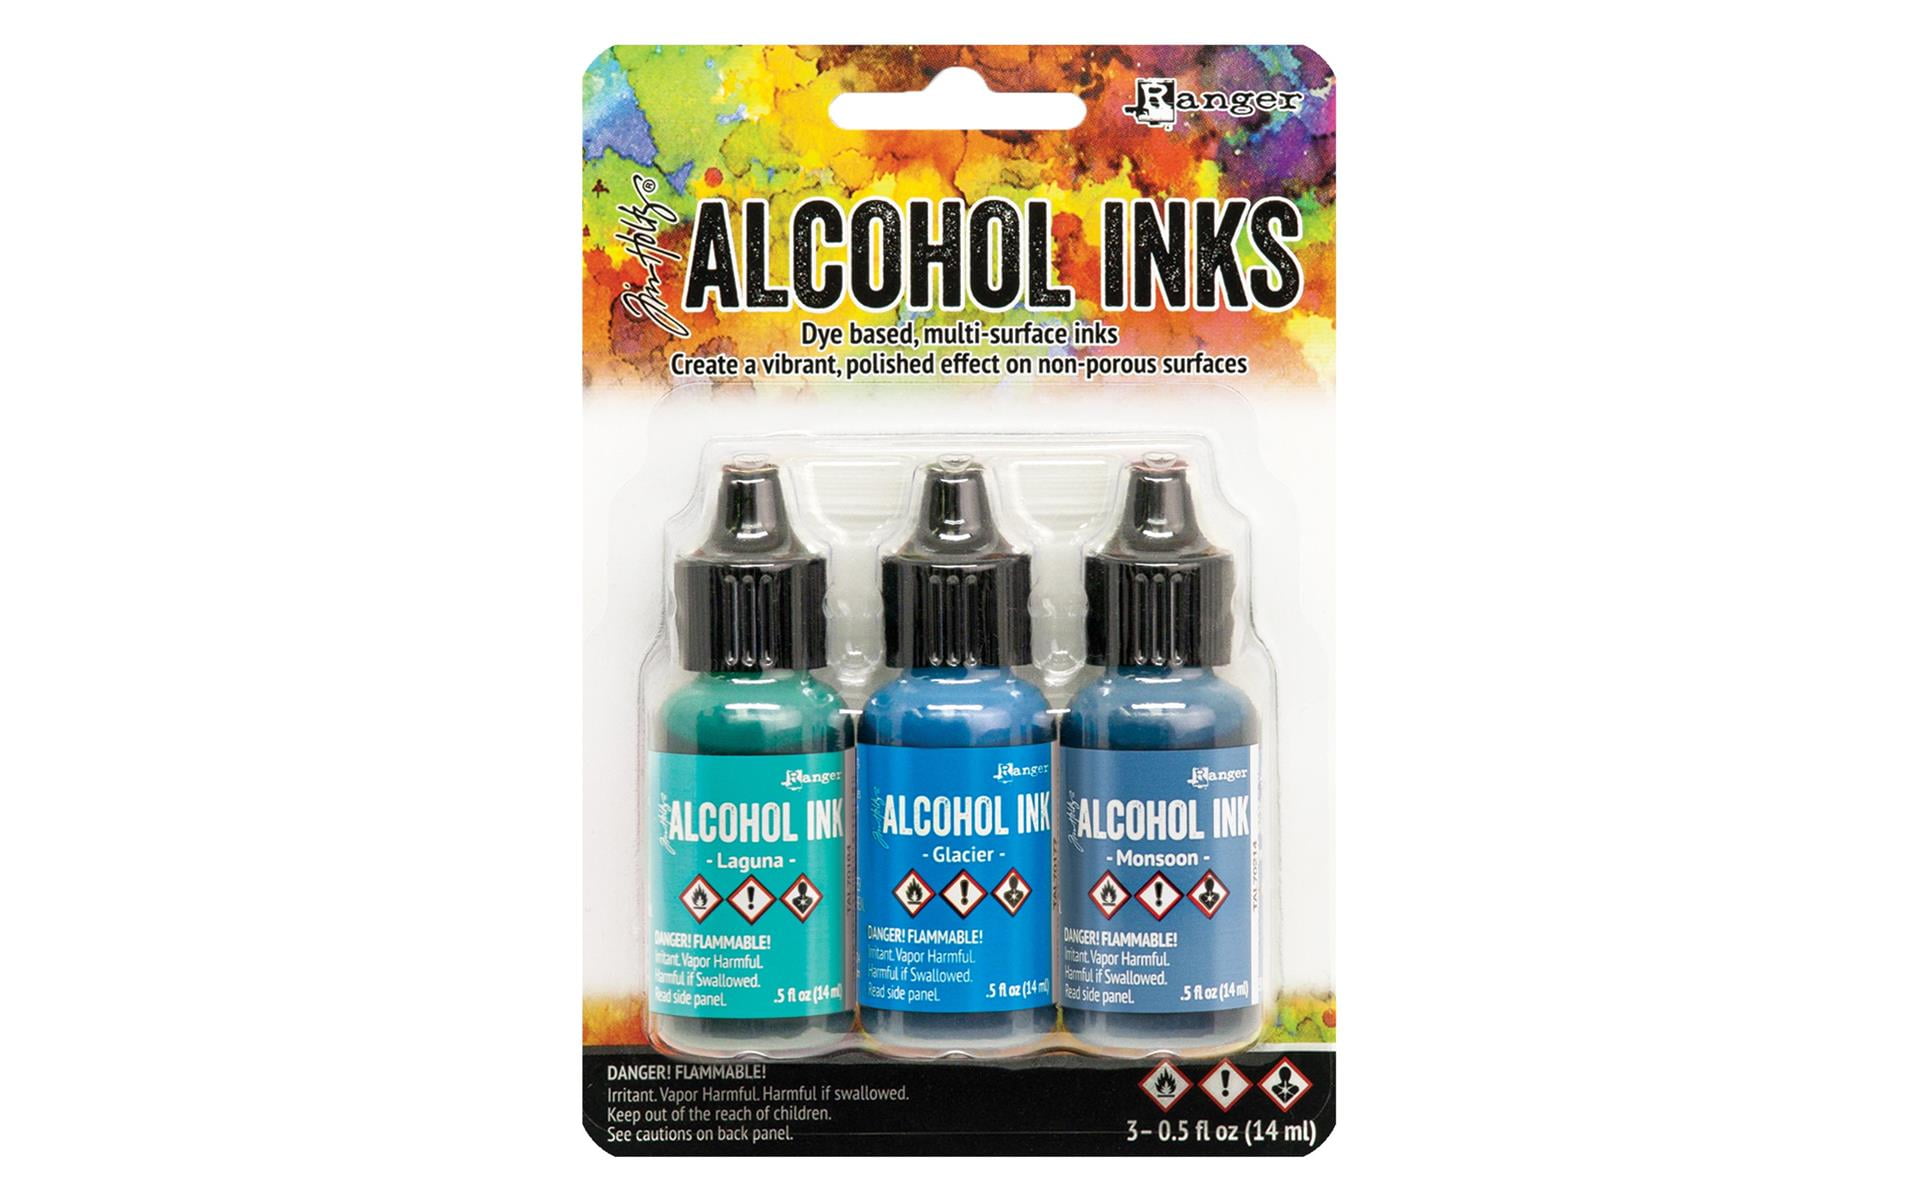 Dixon Tic/ DALER/LYRA/DAS D160181127 FW Liquid Acrylic Ink 6oz Indigo